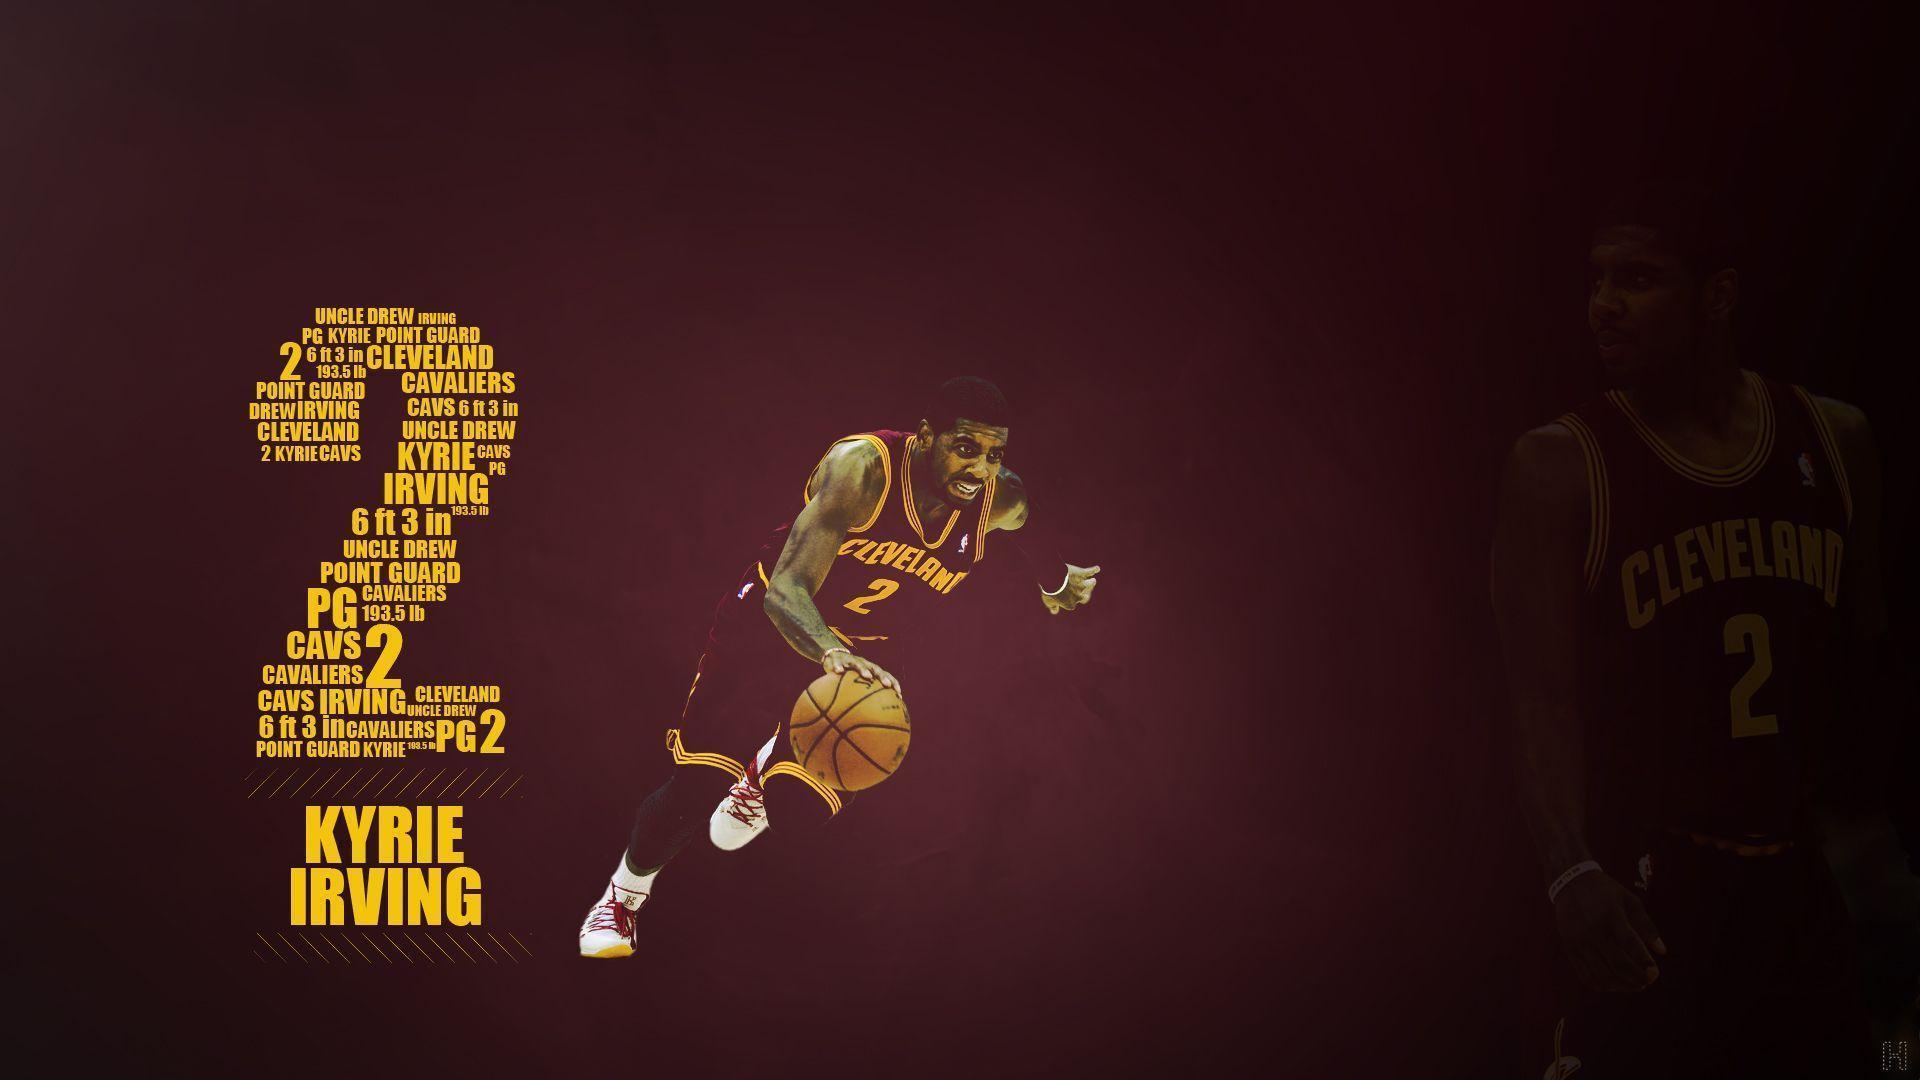 Cleveland Cavaliers Wallpaper HD. Wallpaper, Background